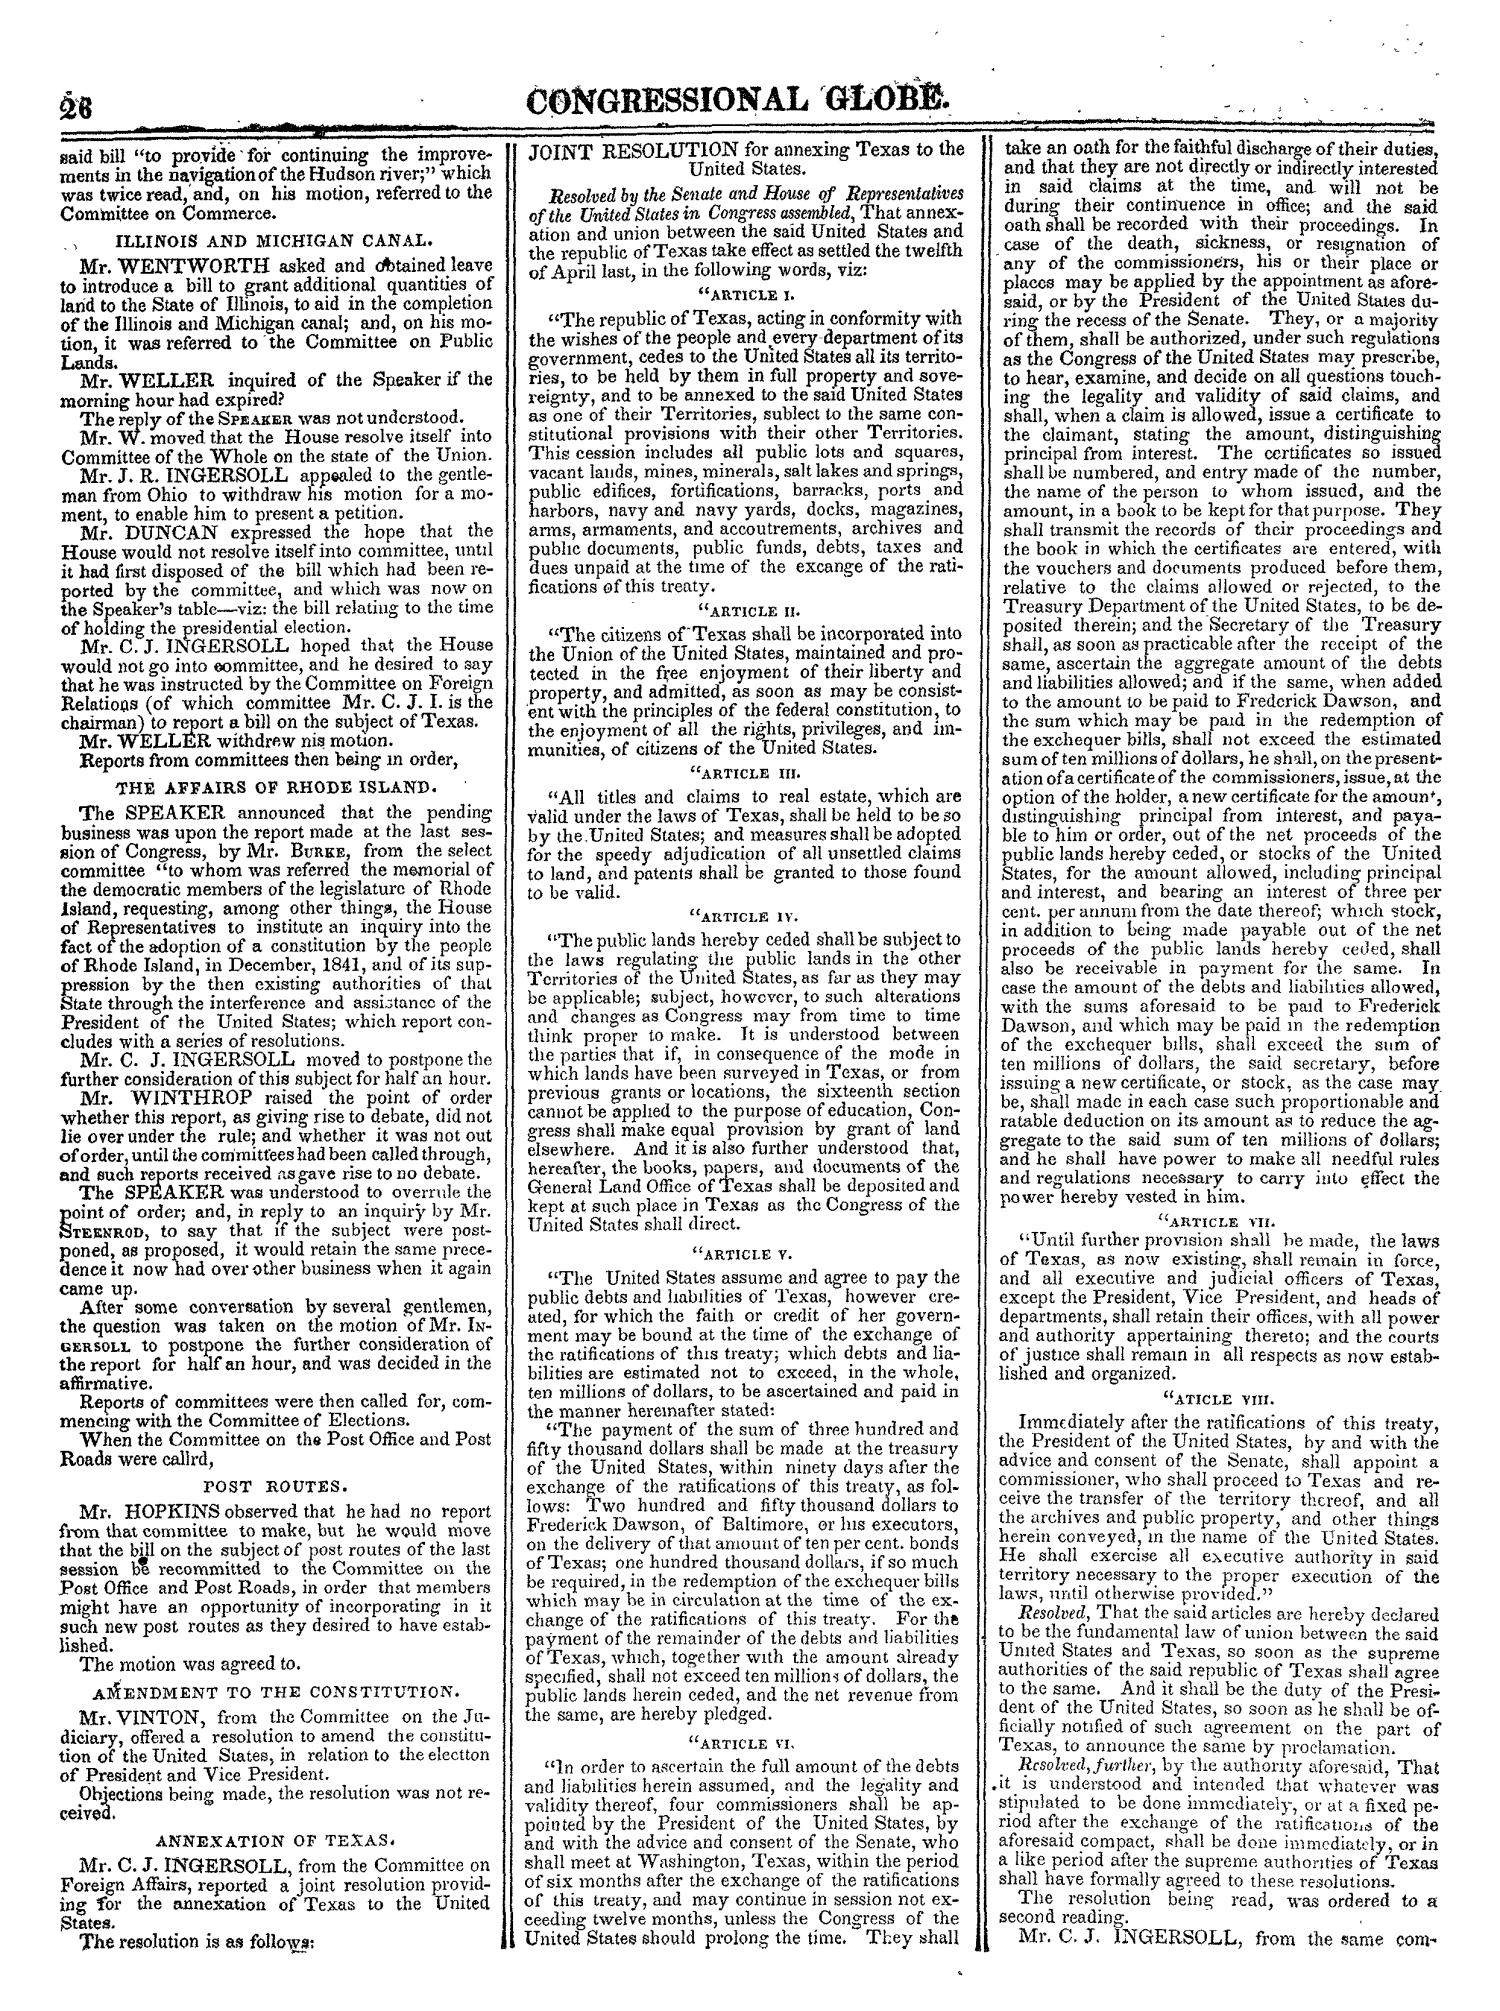 The Congressional Globe, Volume 14: Twenty-Eighth Congress, Second Session
                                                
                                                    26
                                                